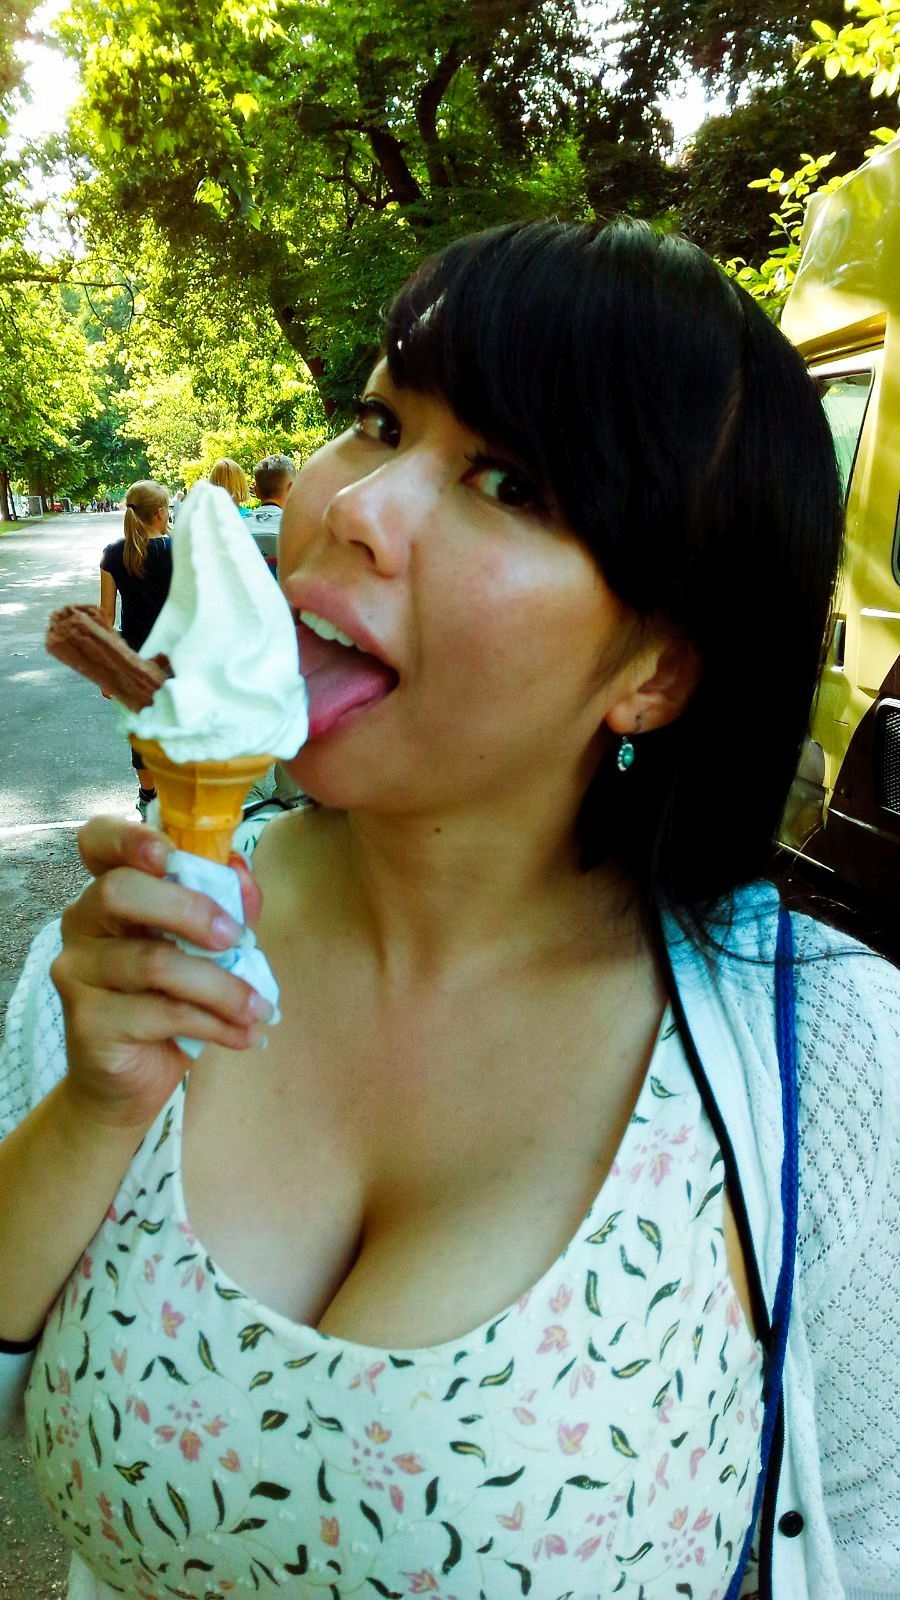 a woman licking an ice cream cone